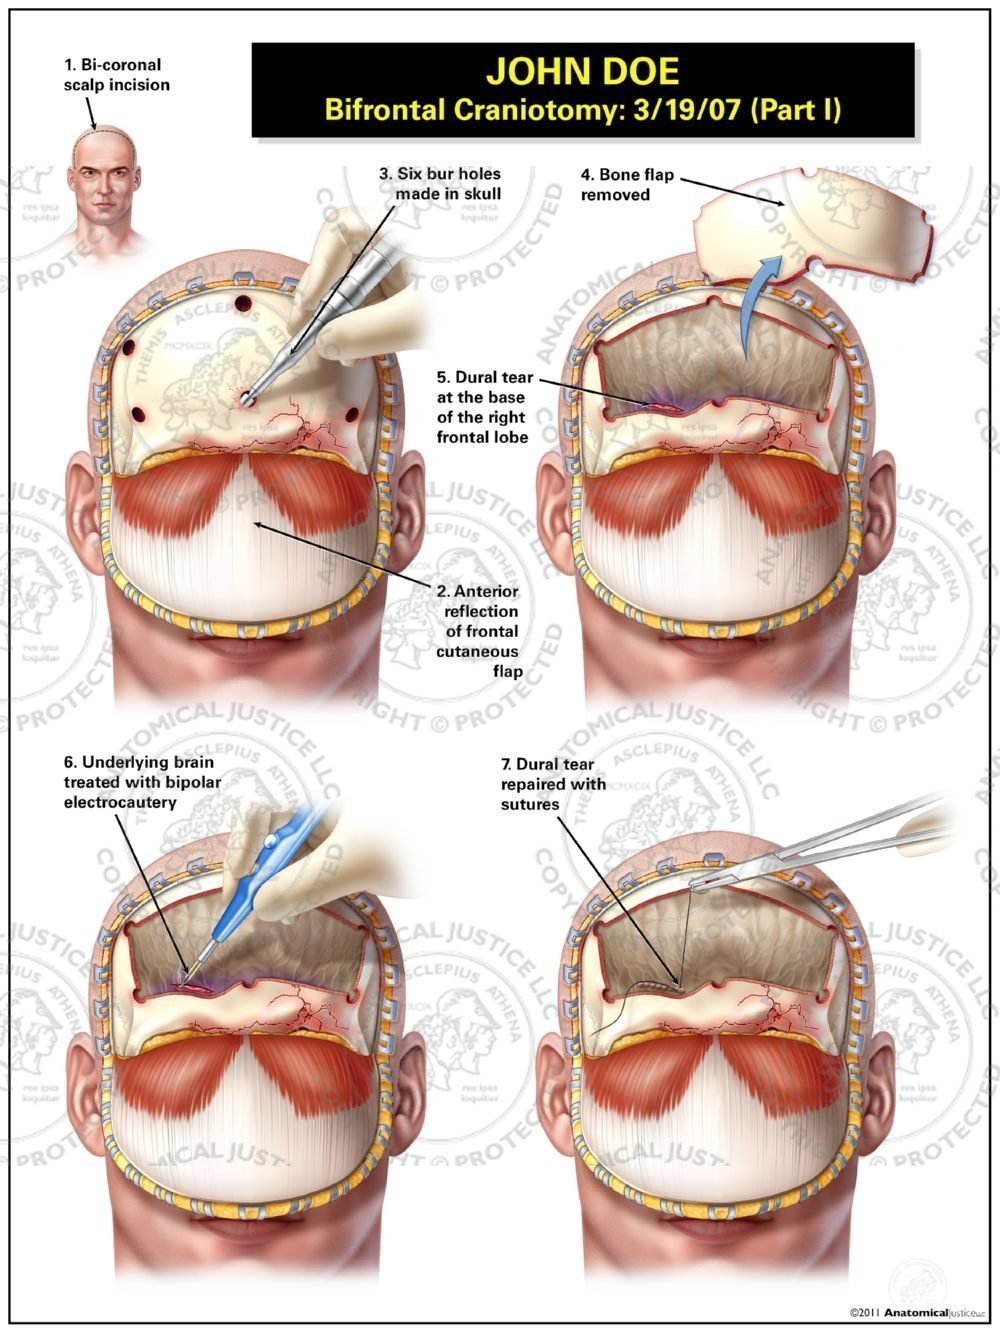 Bifrontal Craniotomy – Part I